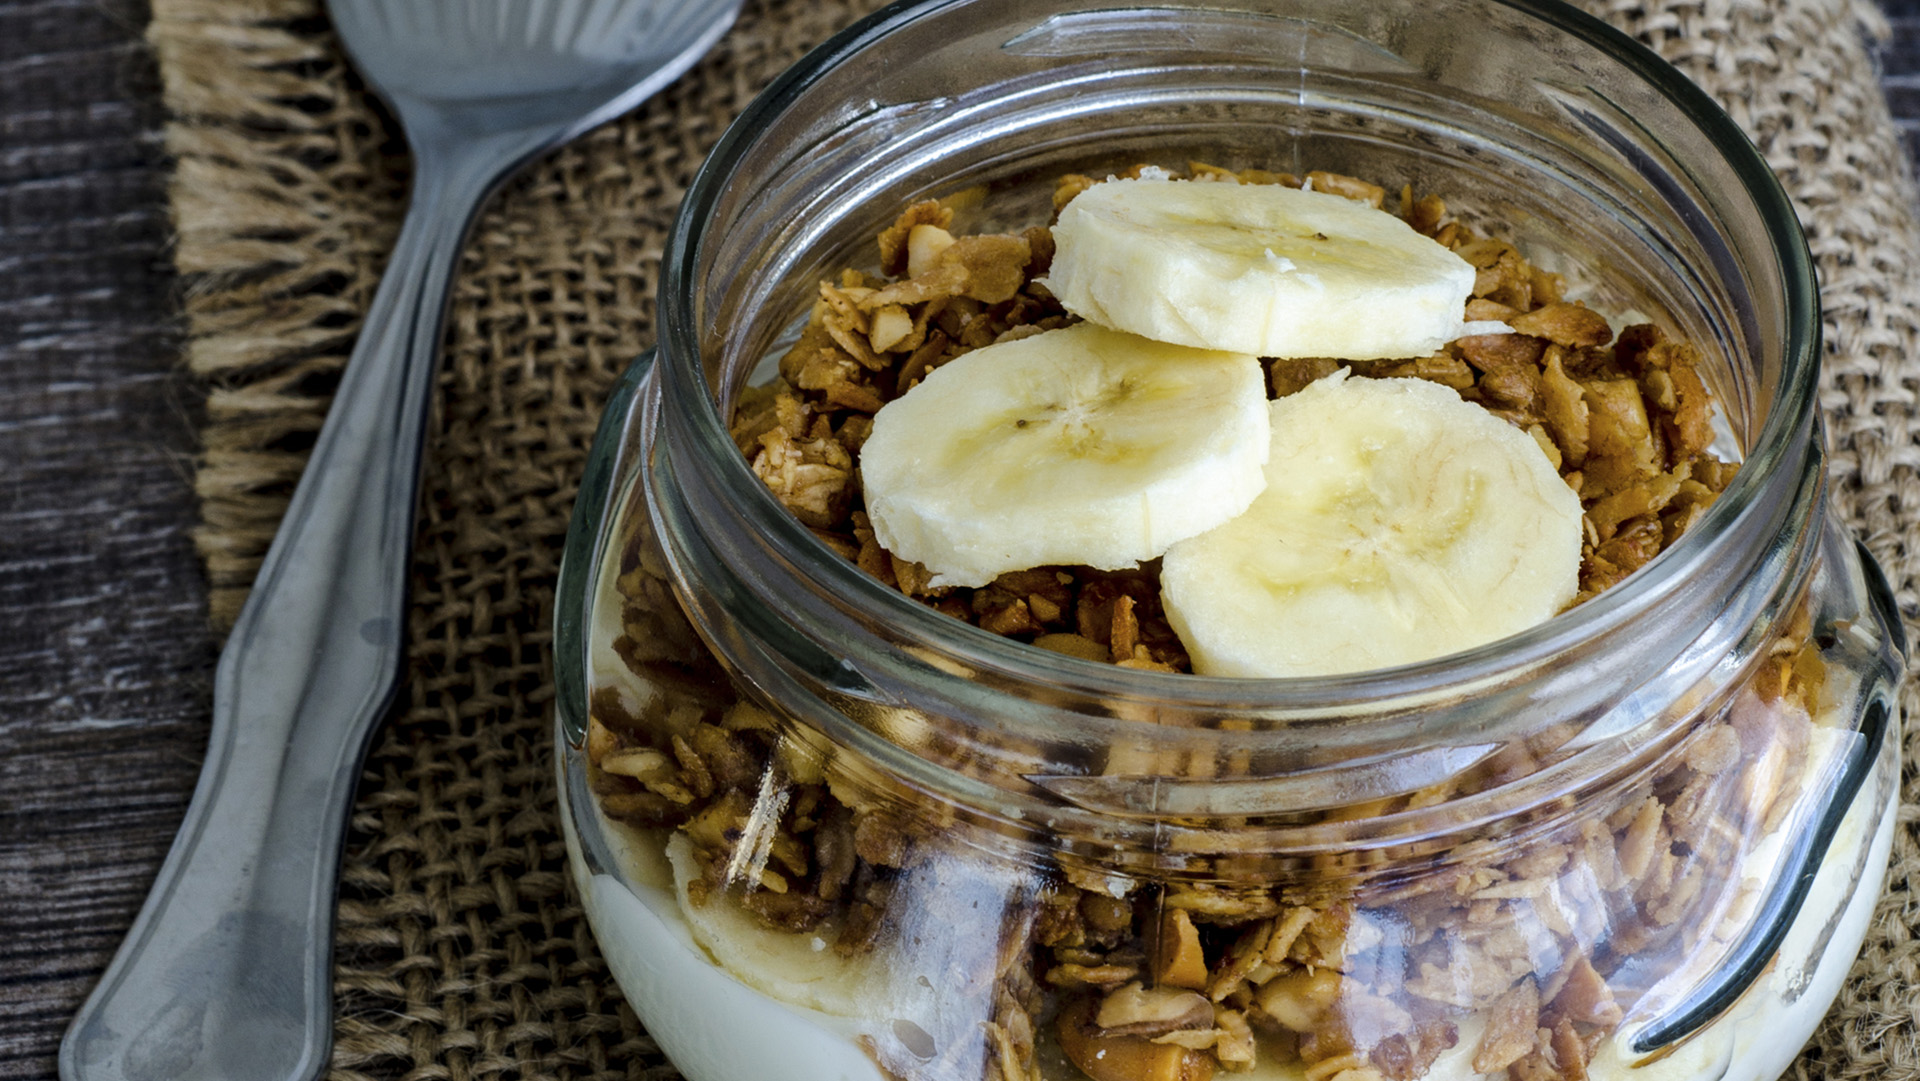 Healthy breakfast of granola, yoghurt and a banana in jar on rustic cloth